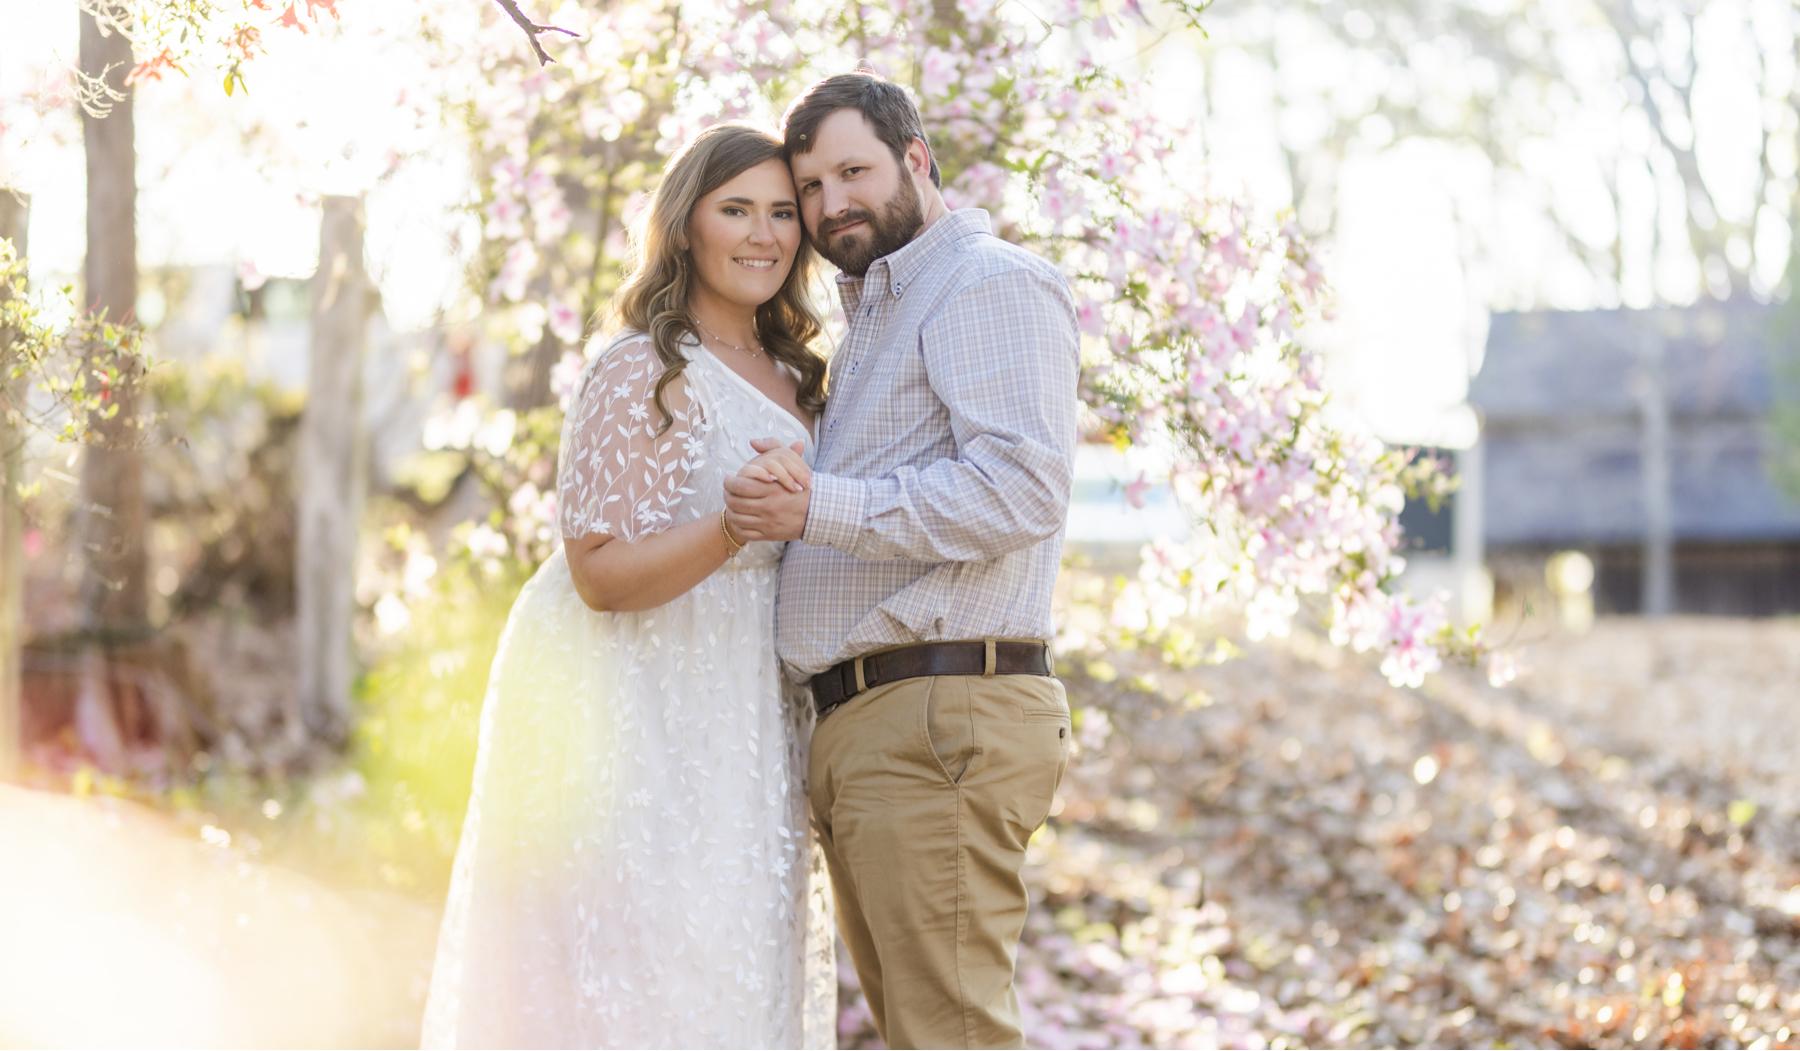 The Wedding Website of Ashley Kerr and Davis Allison